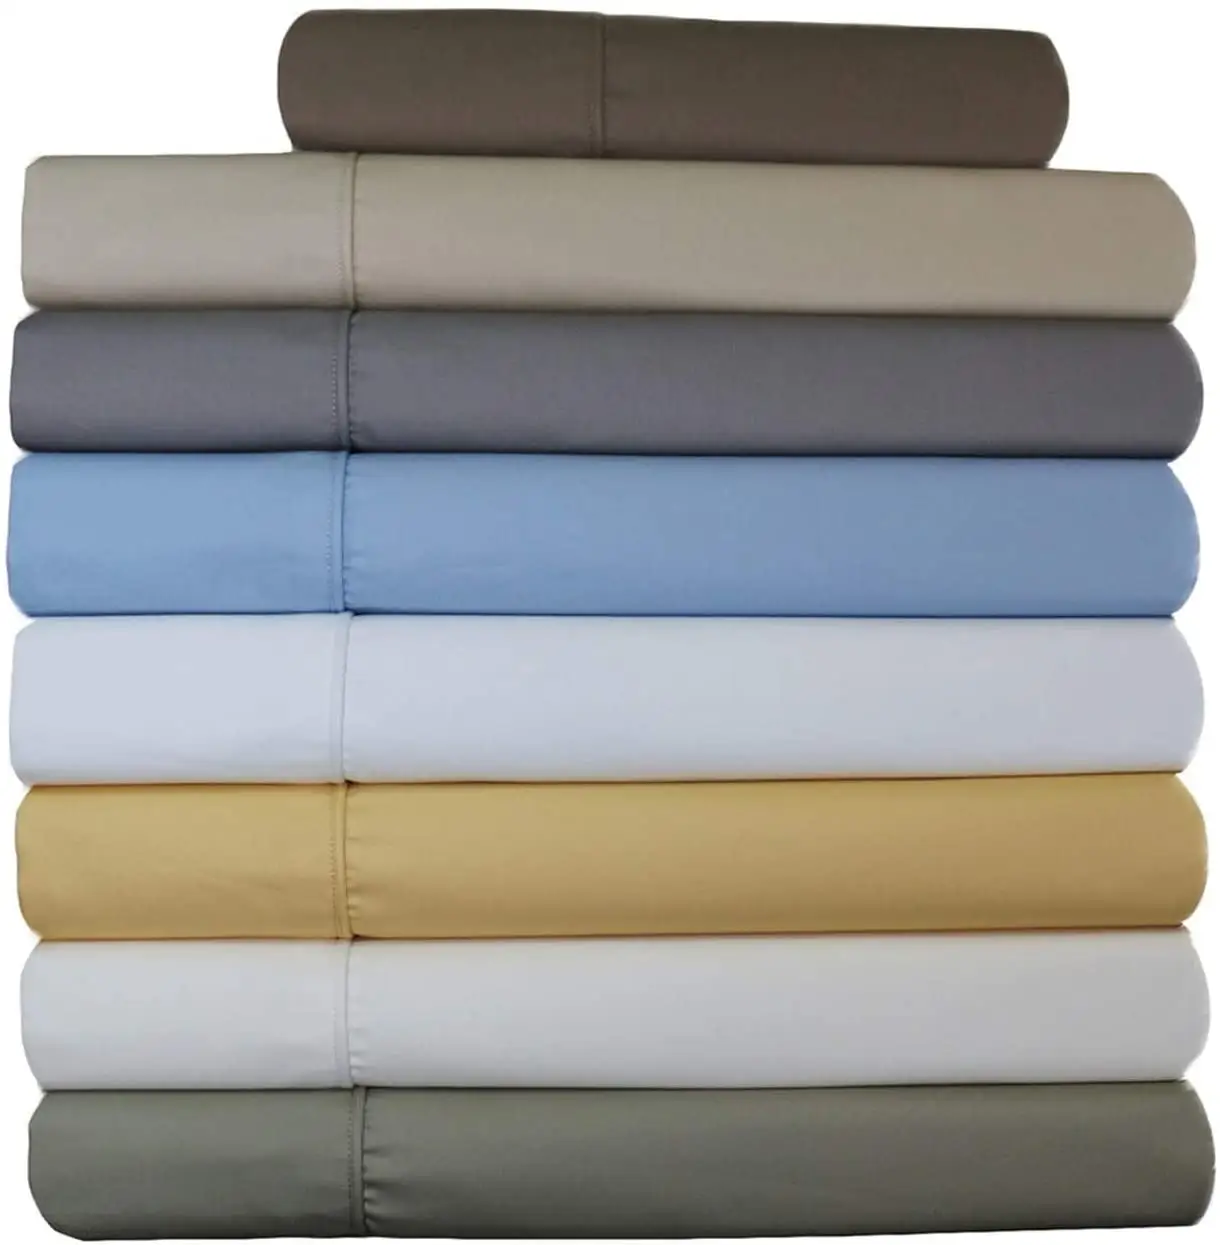 Solid Color Comforter Bedsheet Bedding Set 1800tc Egyptian Cotton Sheet Sets Home 4 Piece Microfiber Bed Sheet